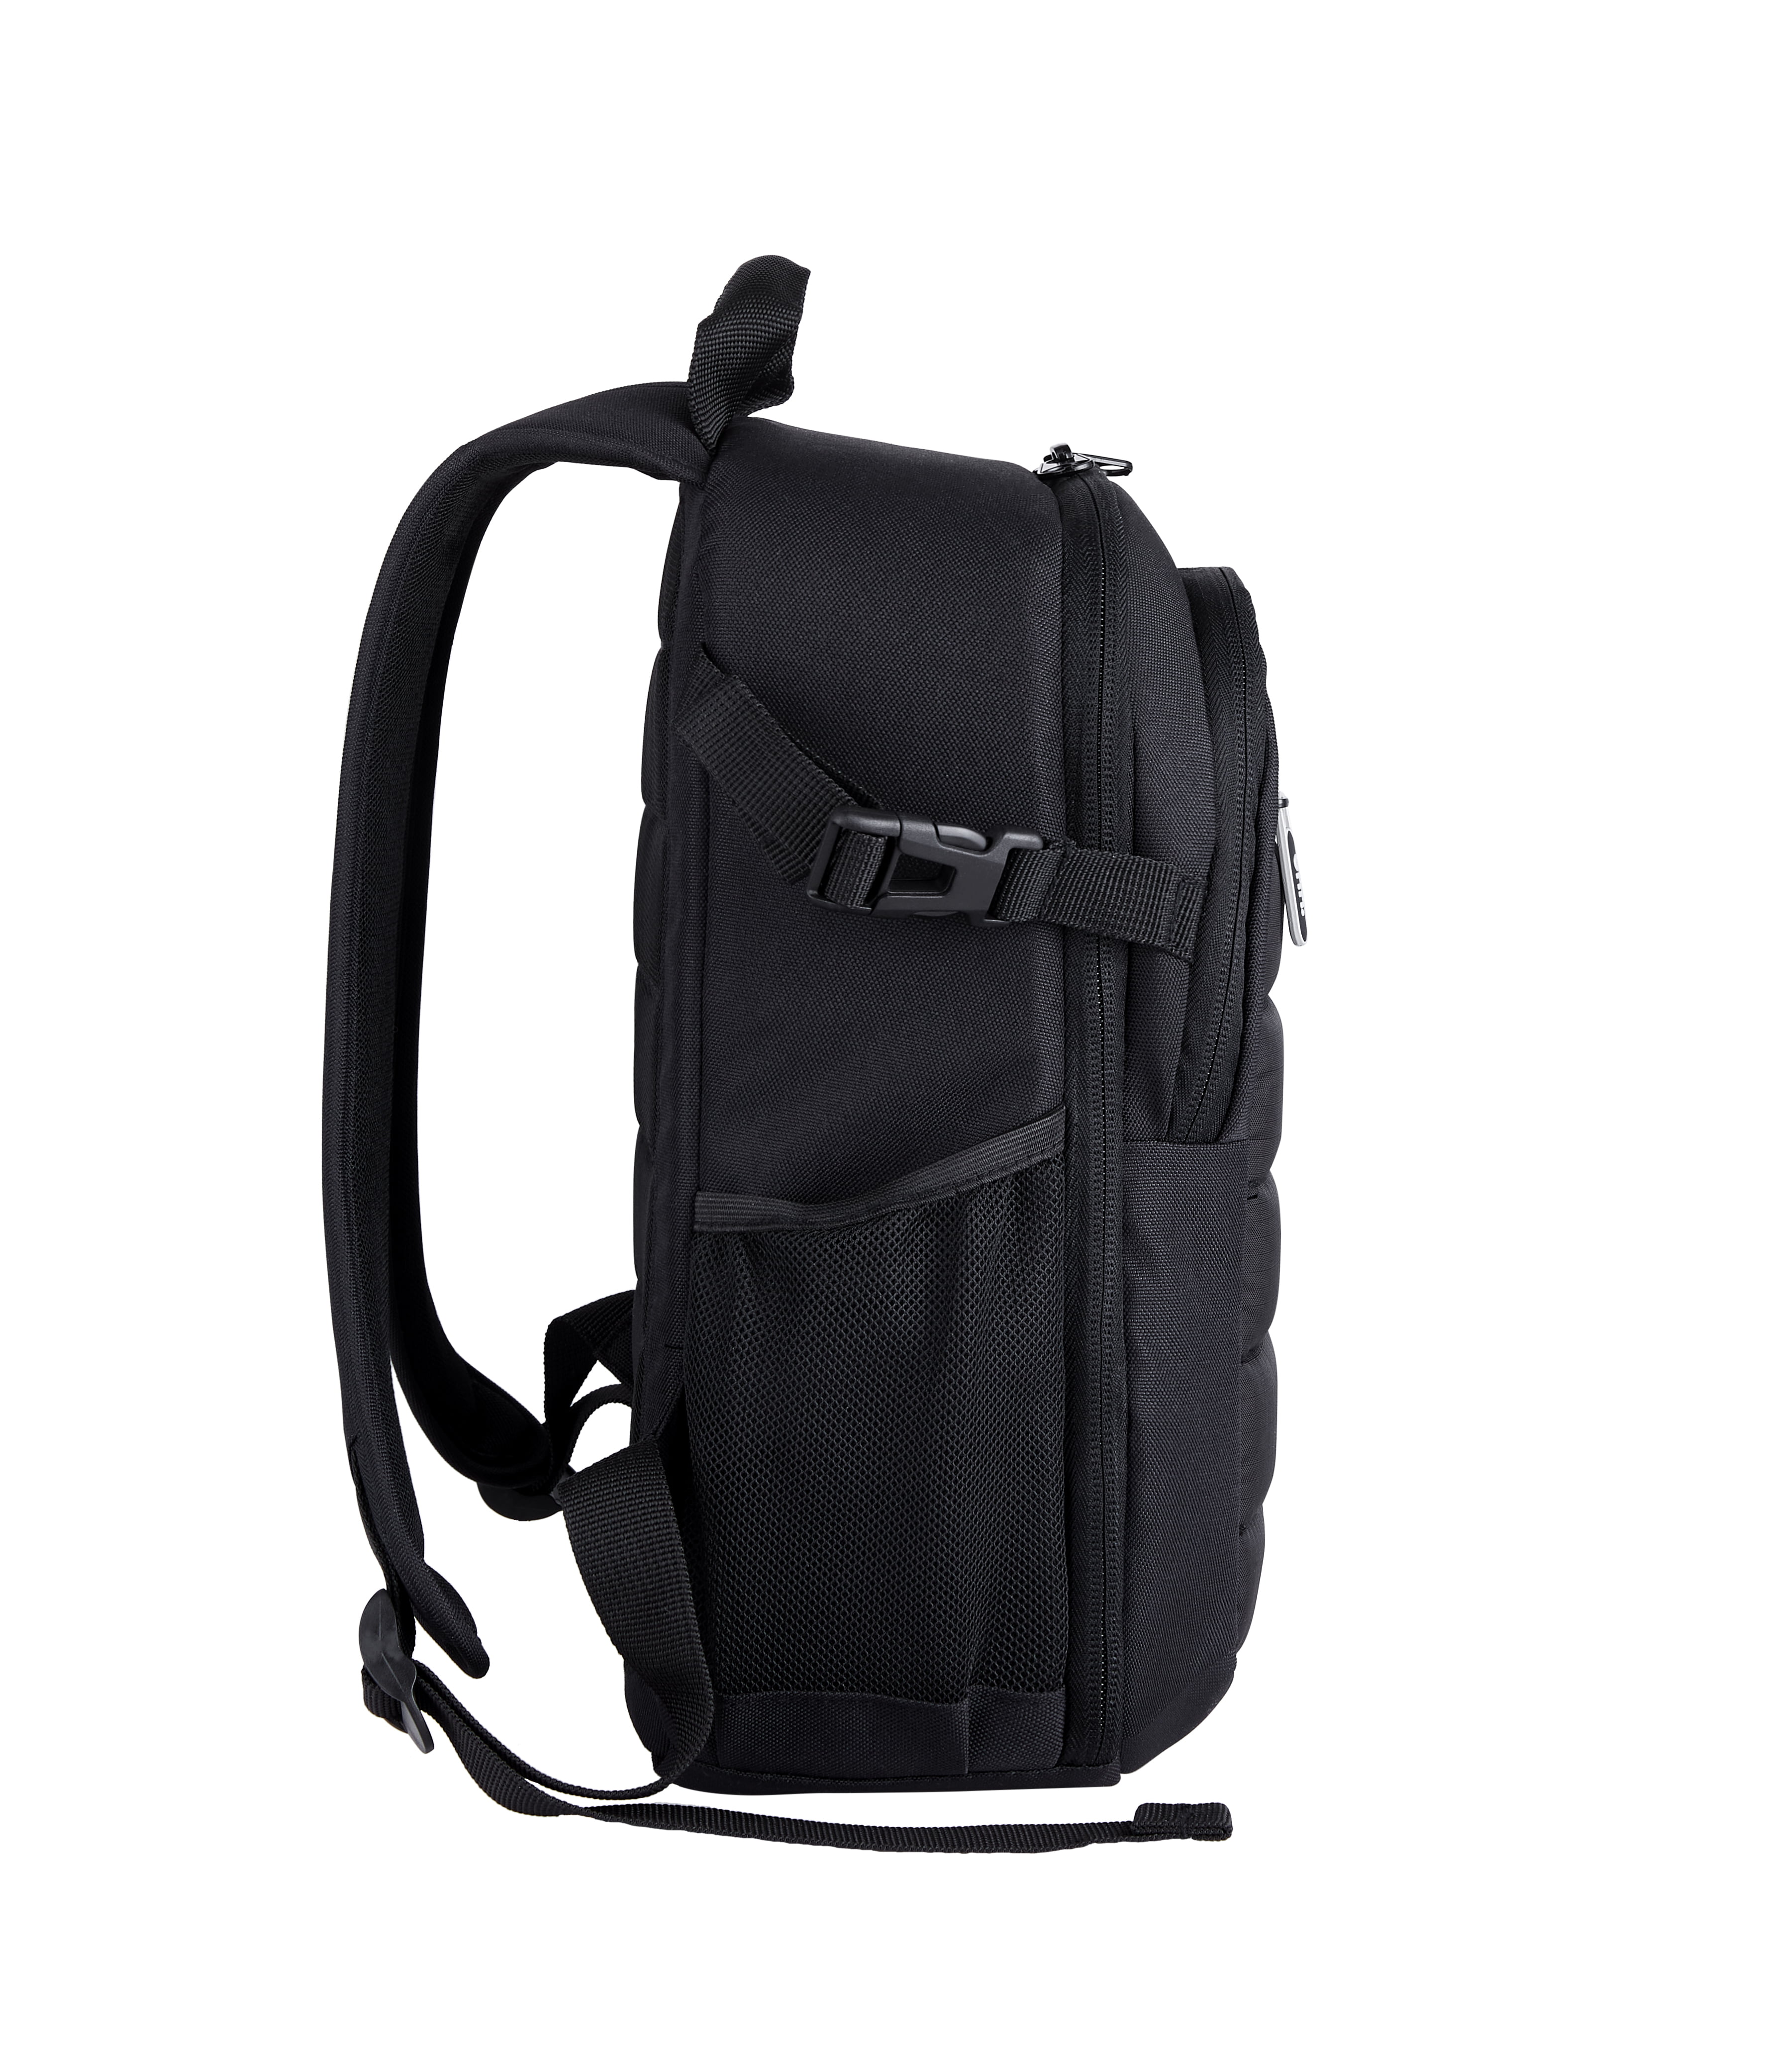 Water-resistant DSLR camera backpack with adjustable pockets